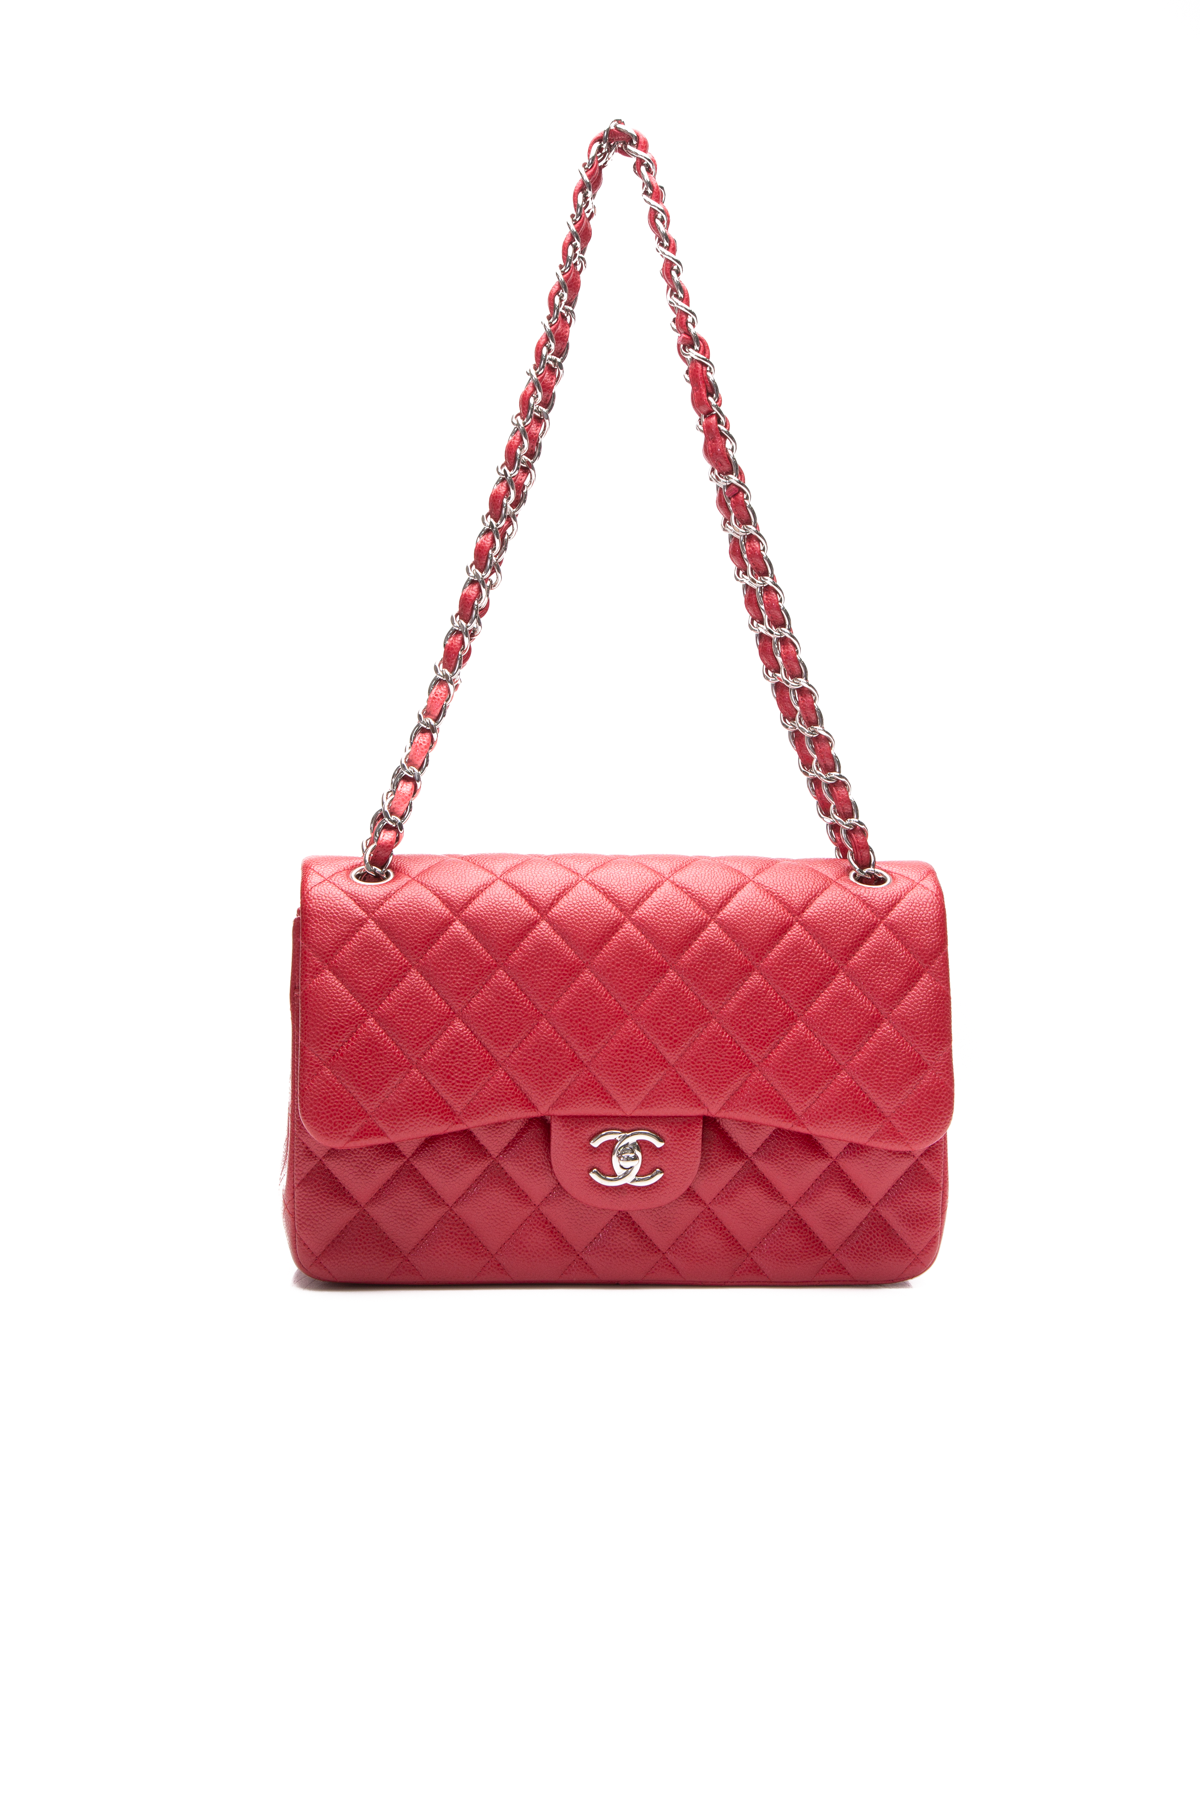 chanel light pink purse bag